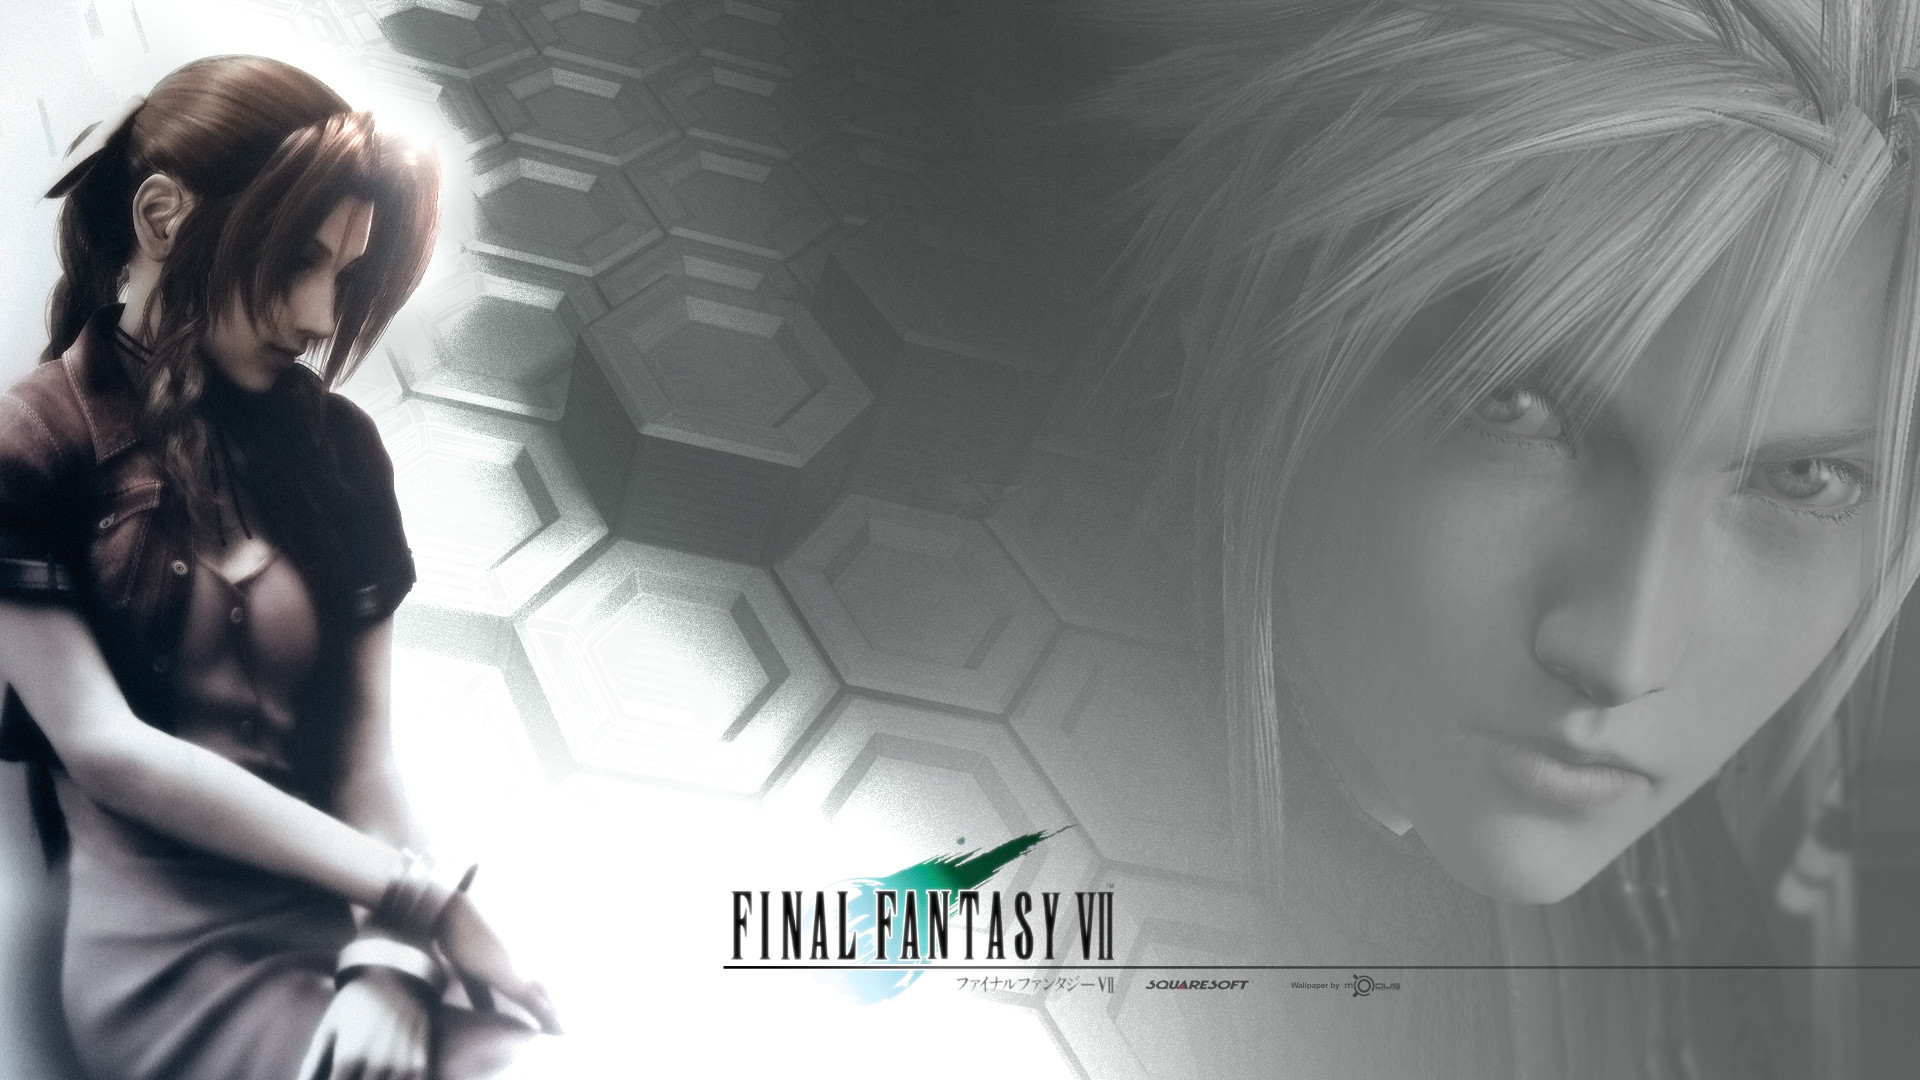 Tifa Lockhart  Final Fantasy VII Remake Video Game 4K wallpaper download